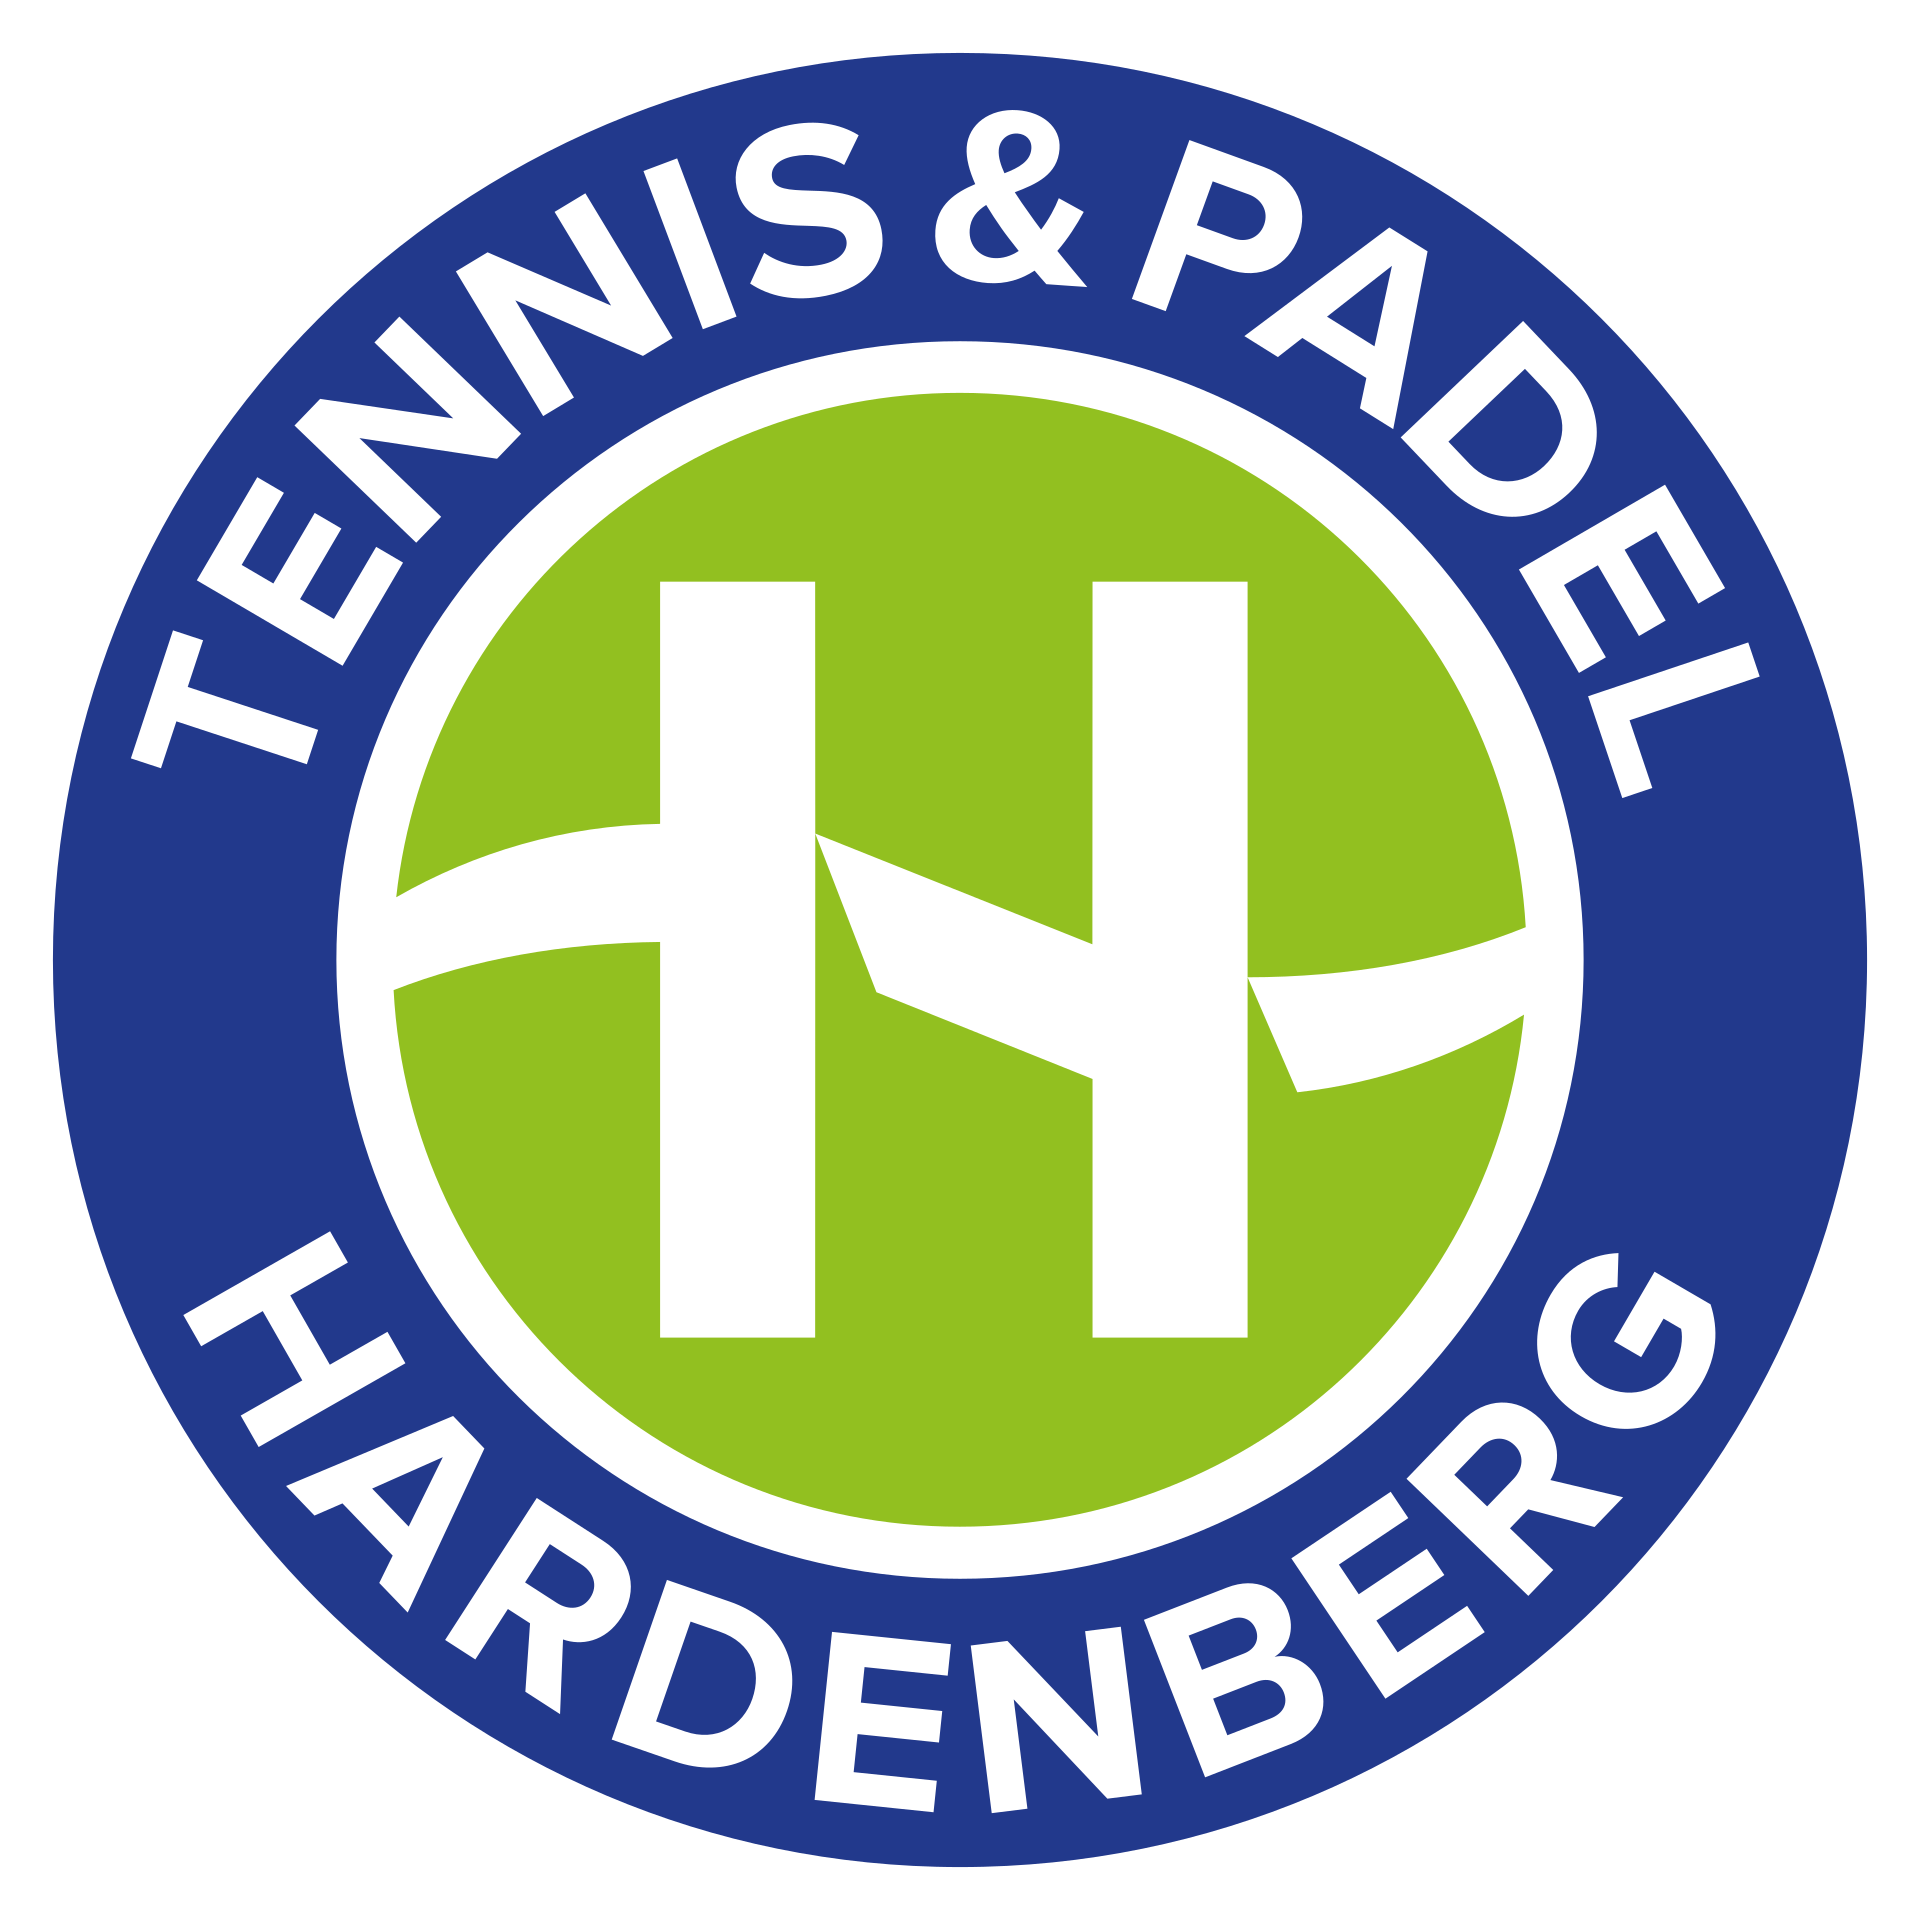 Profile image of venue Tennis en Padel Club Hardenberg